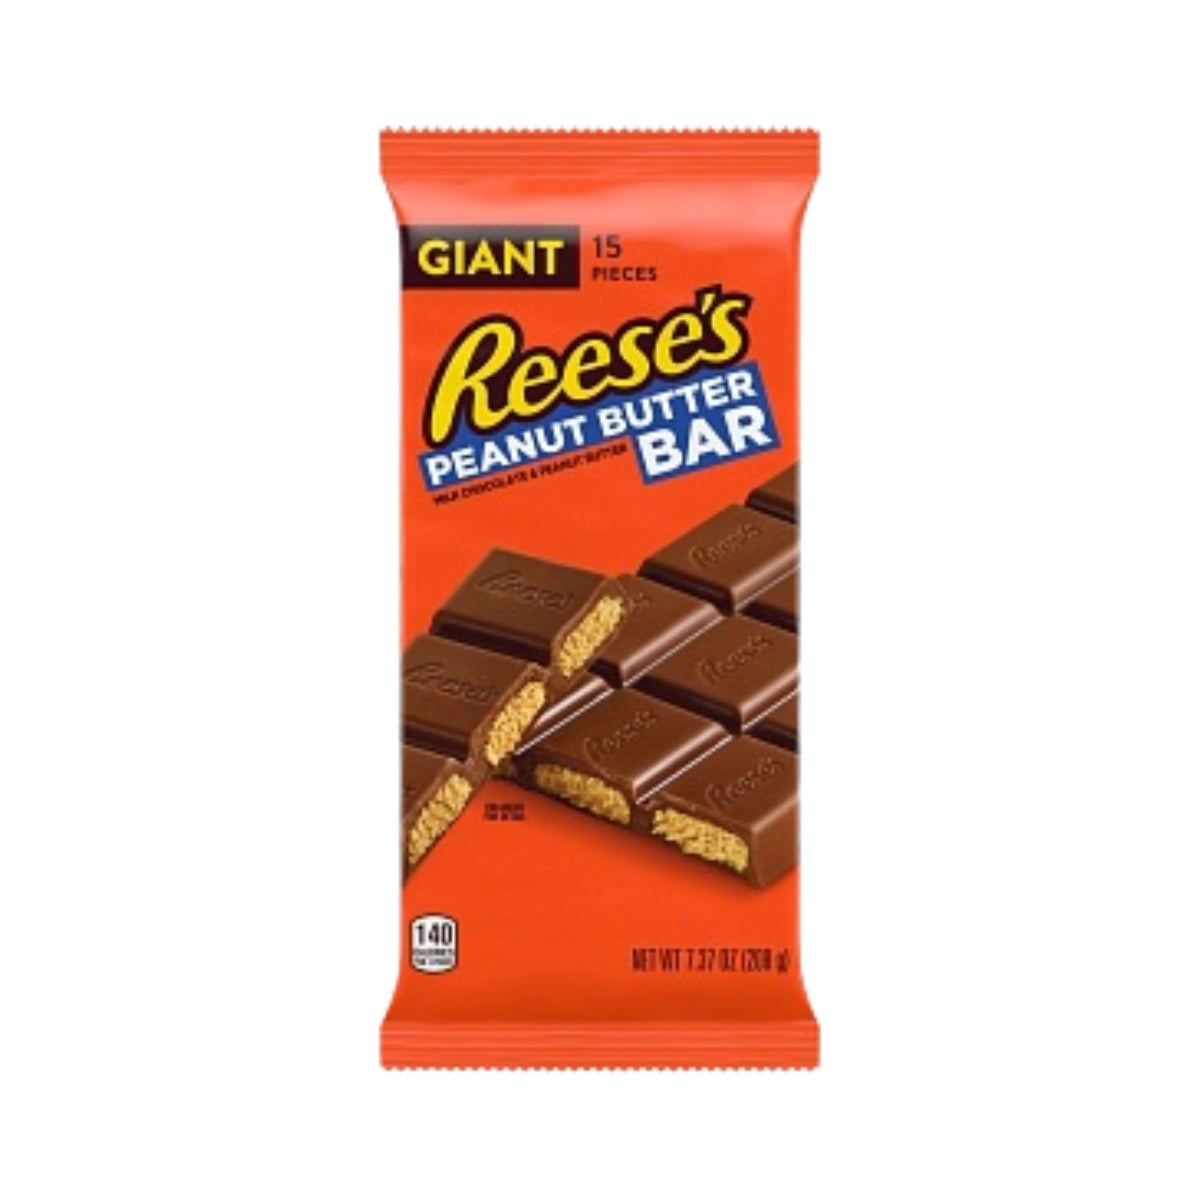 Reese's Giant Peanut Butter Bar 209 g